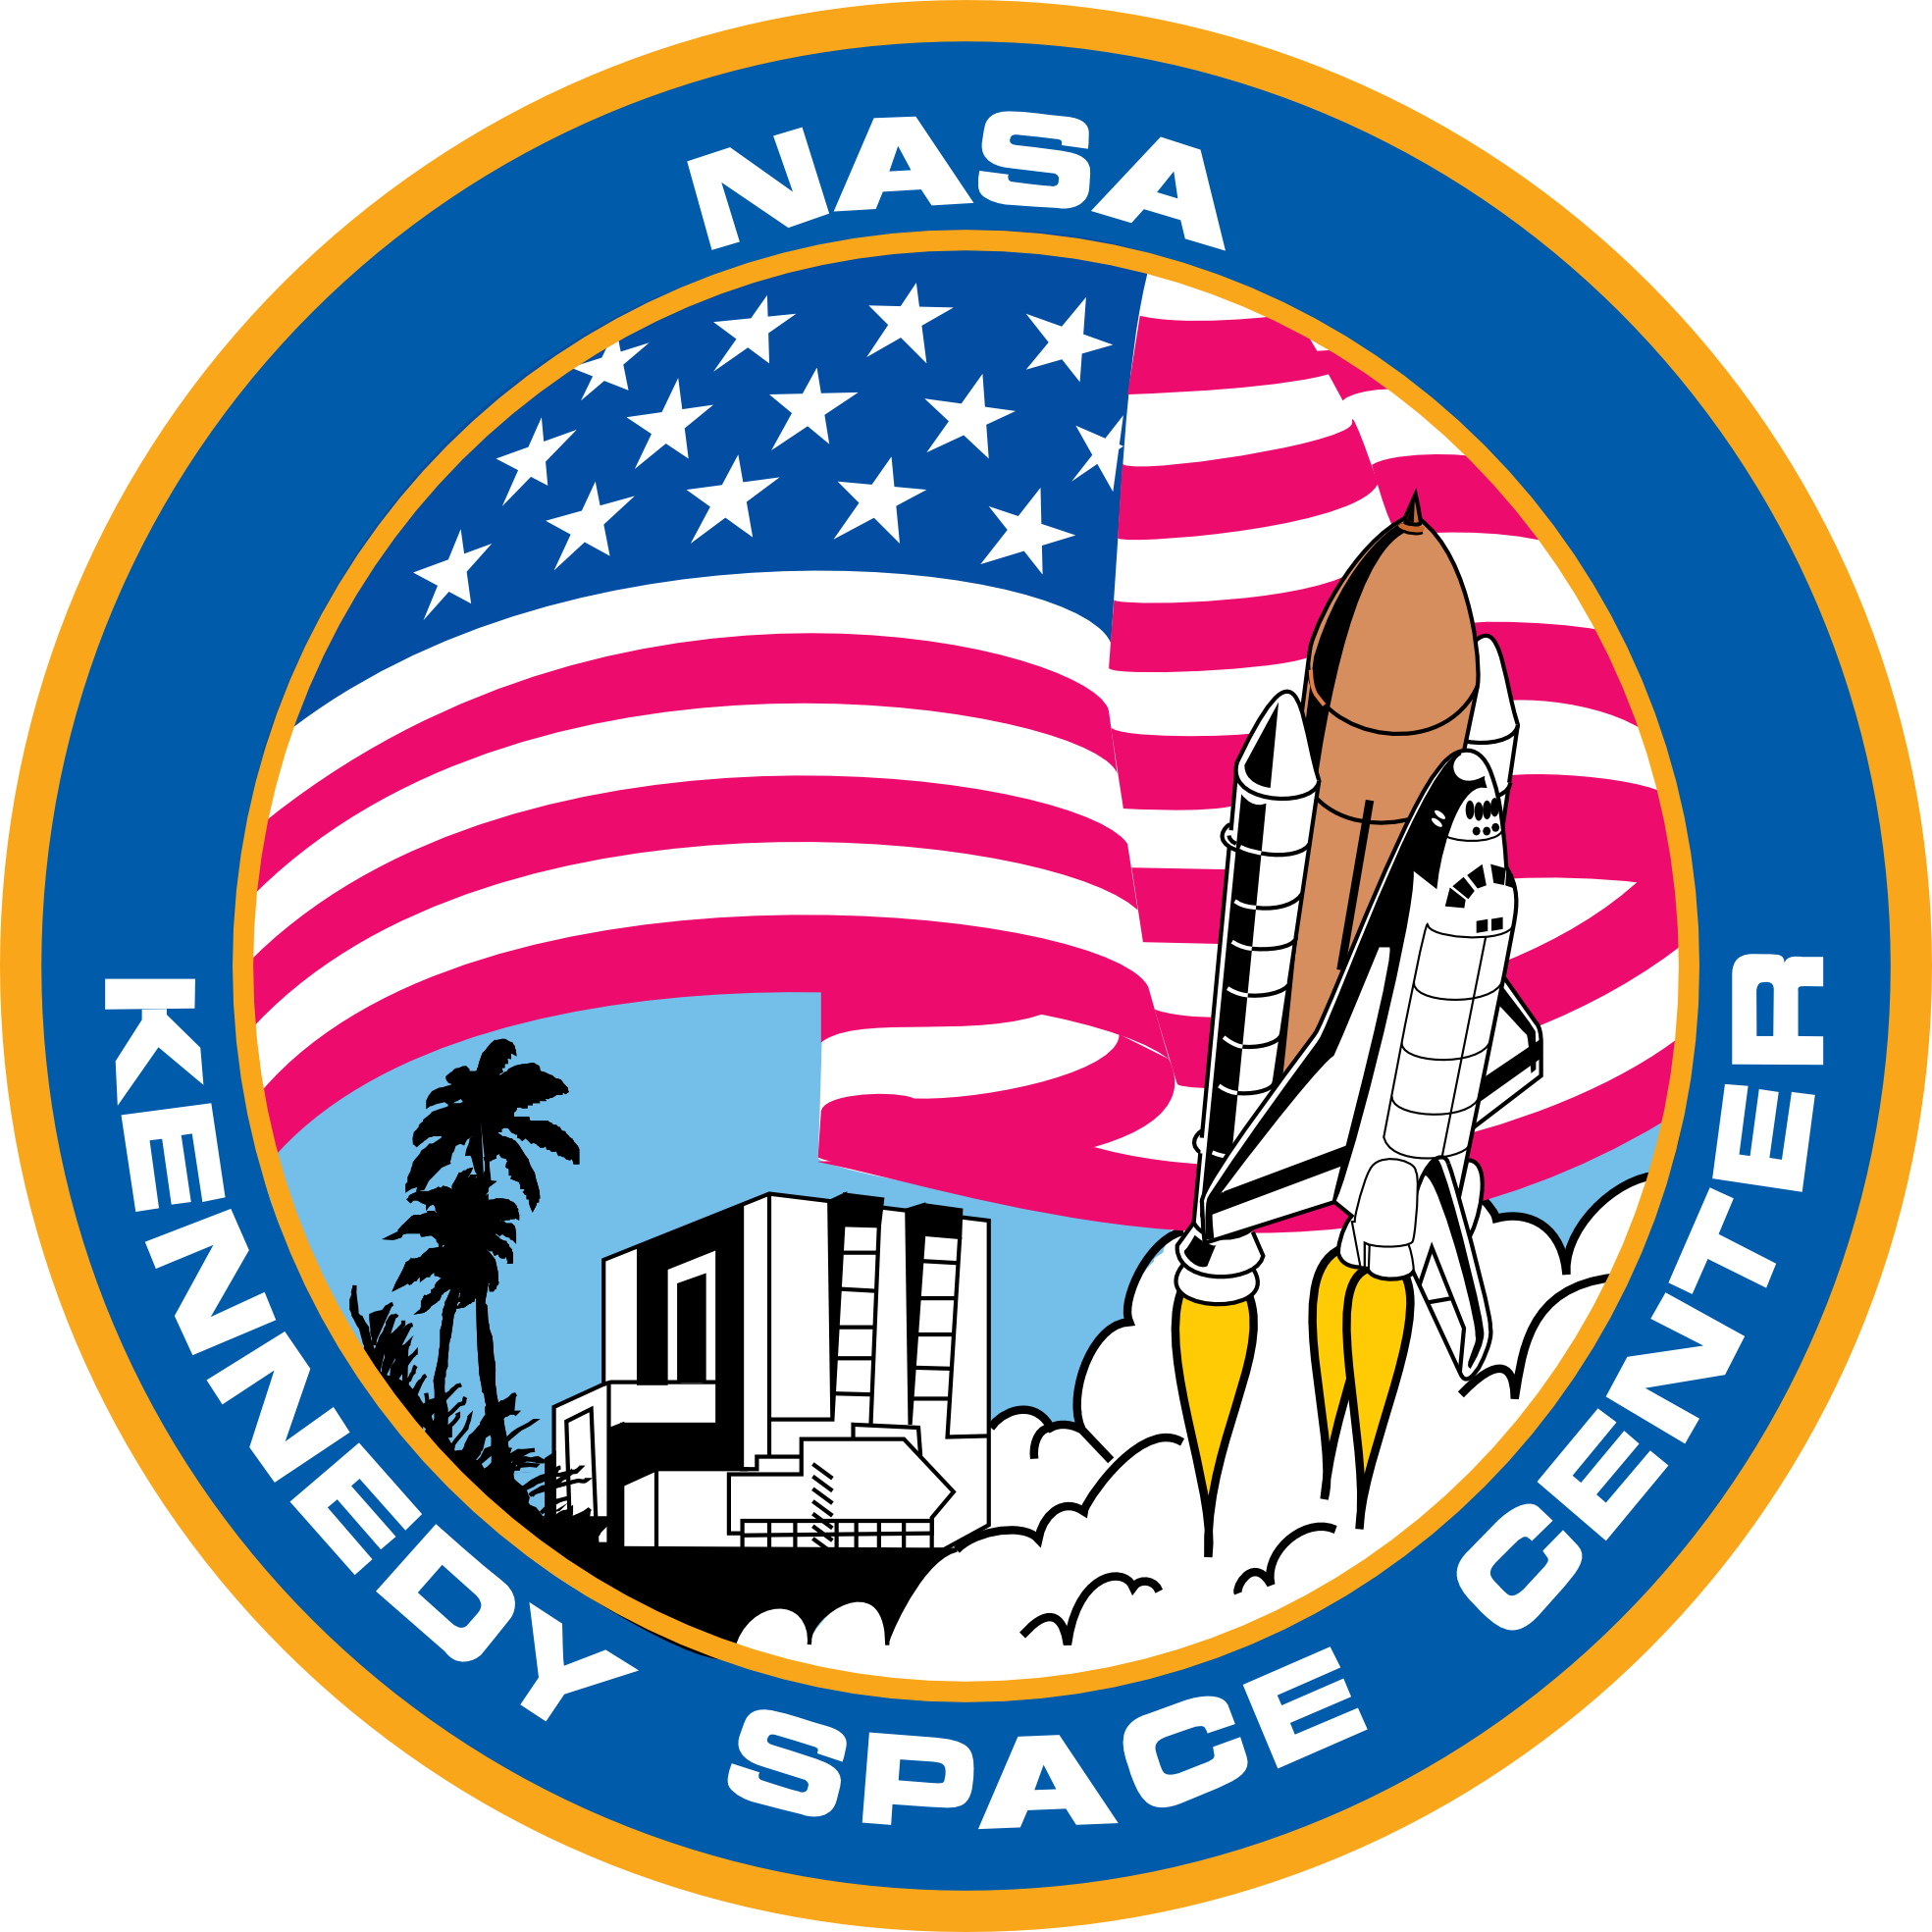 NASA Logo 1969 - Pics about space